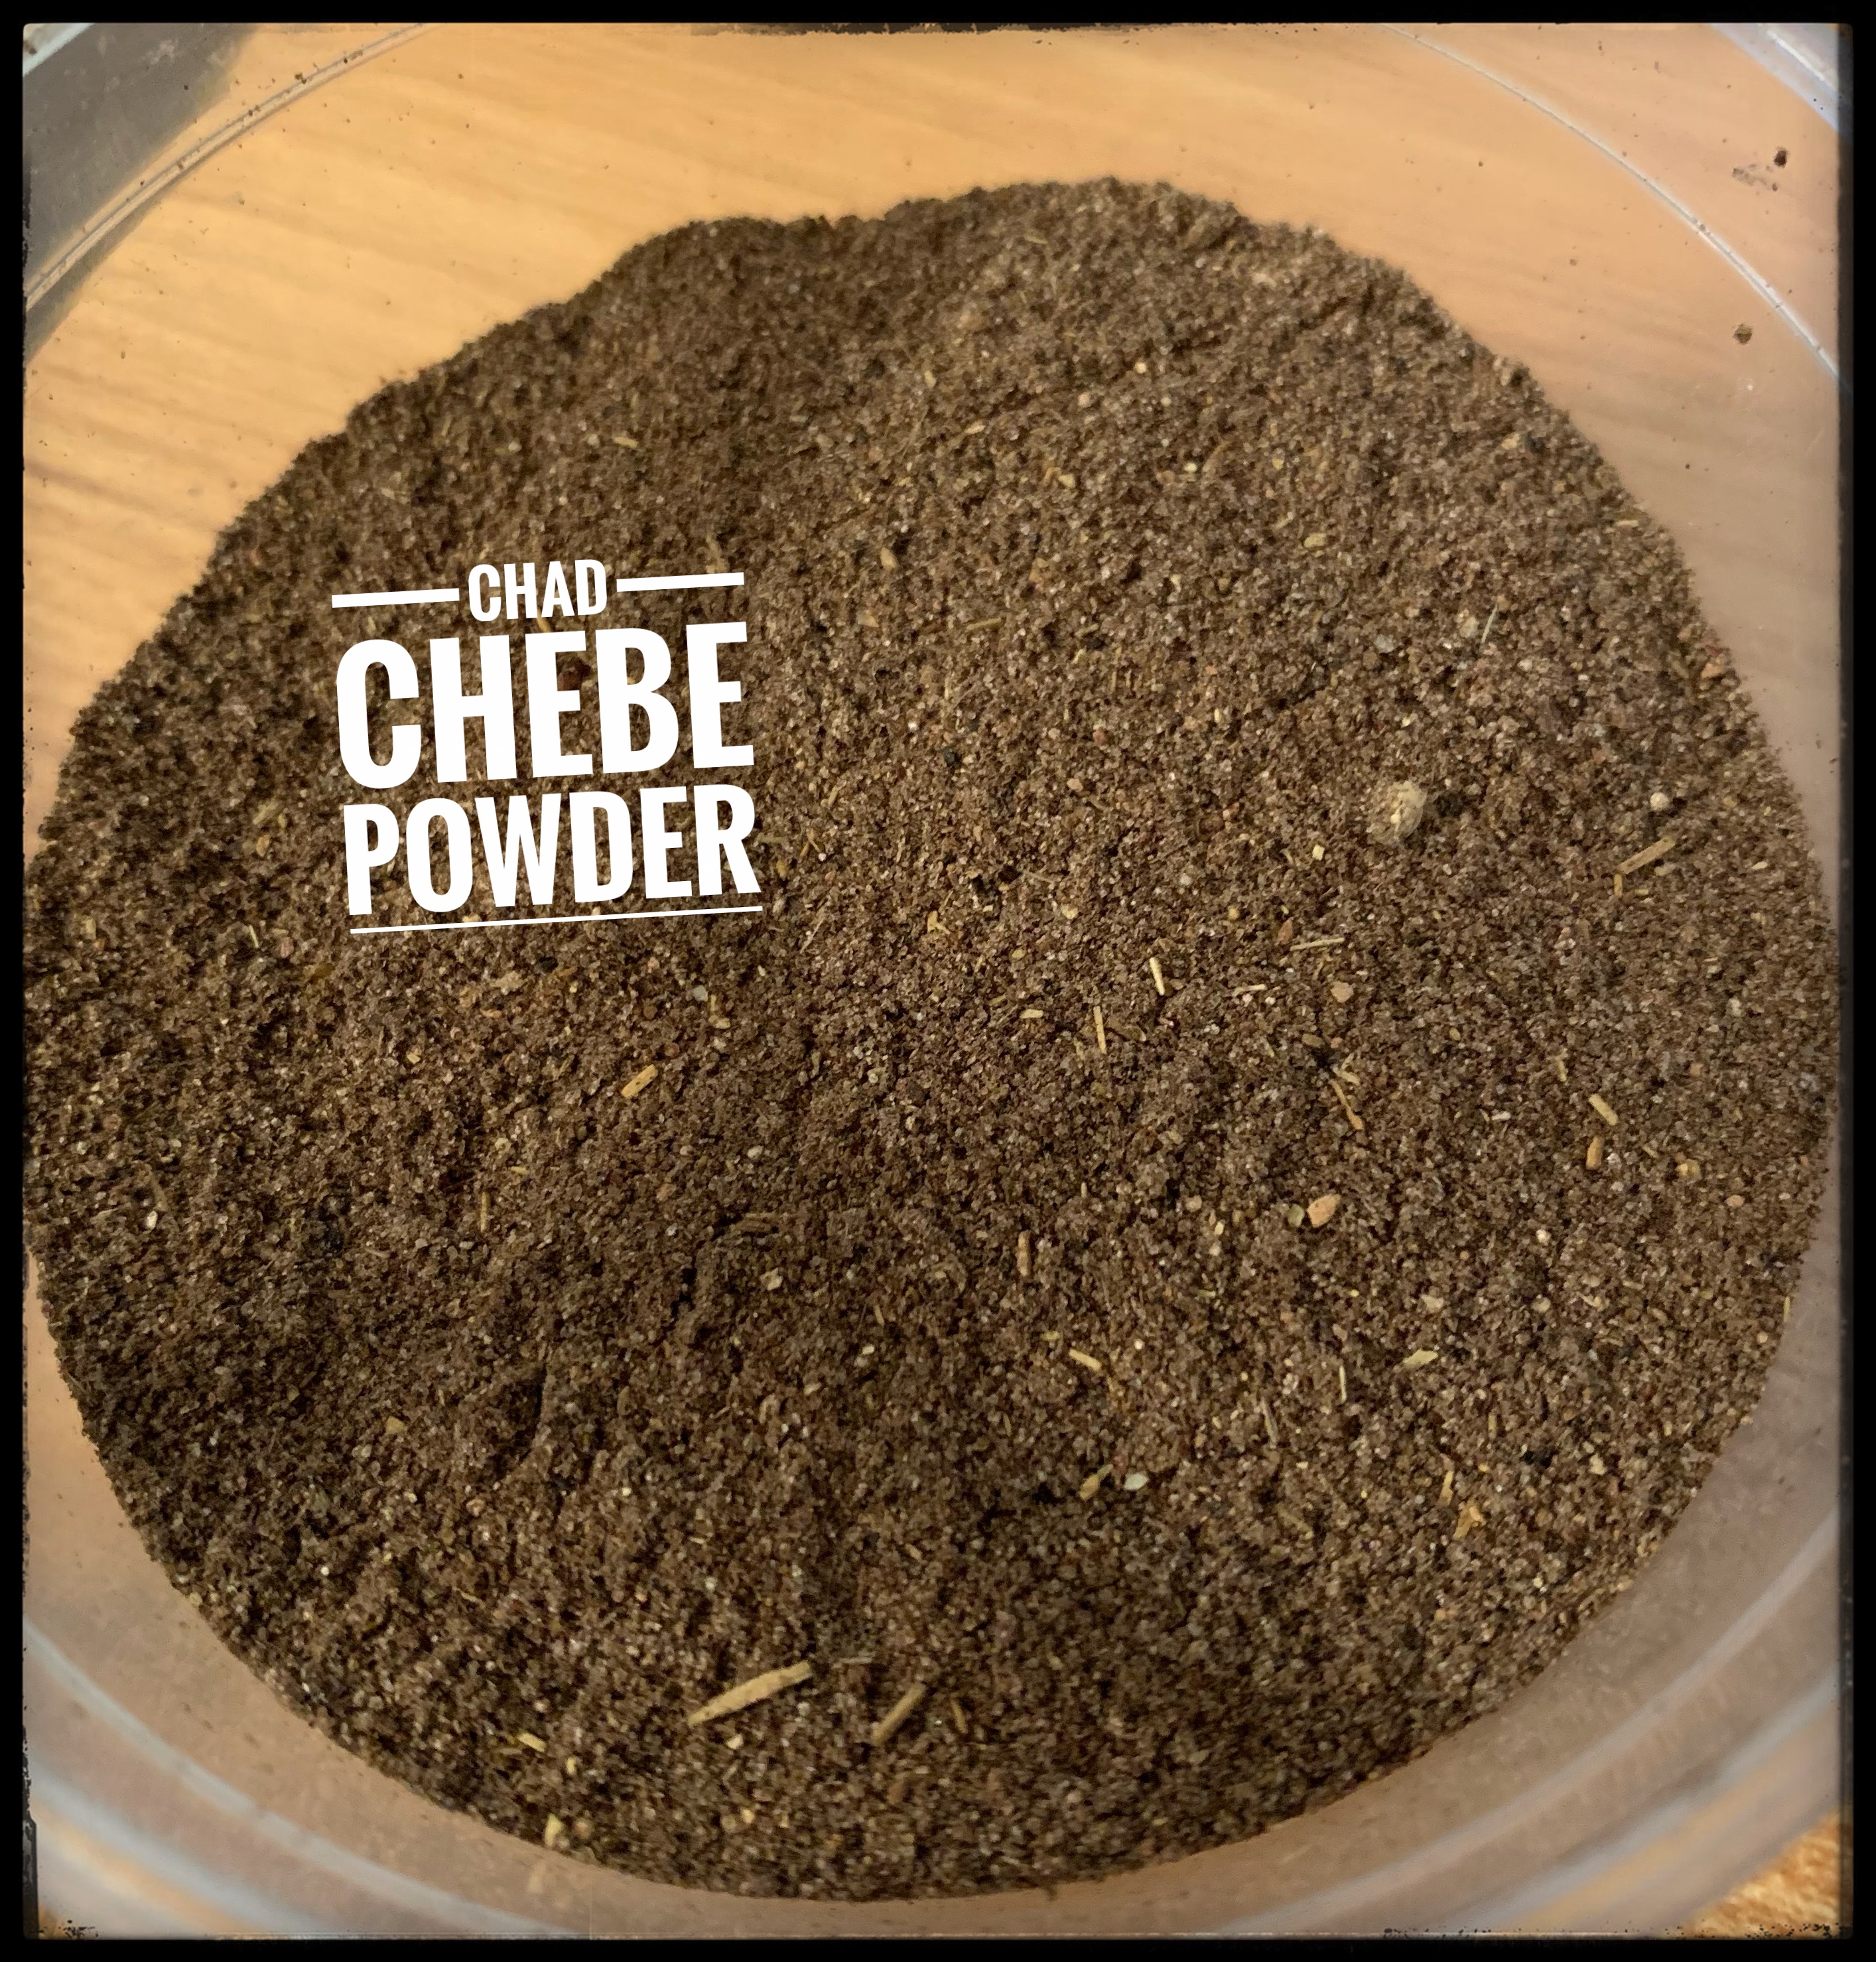 Chebe Powder